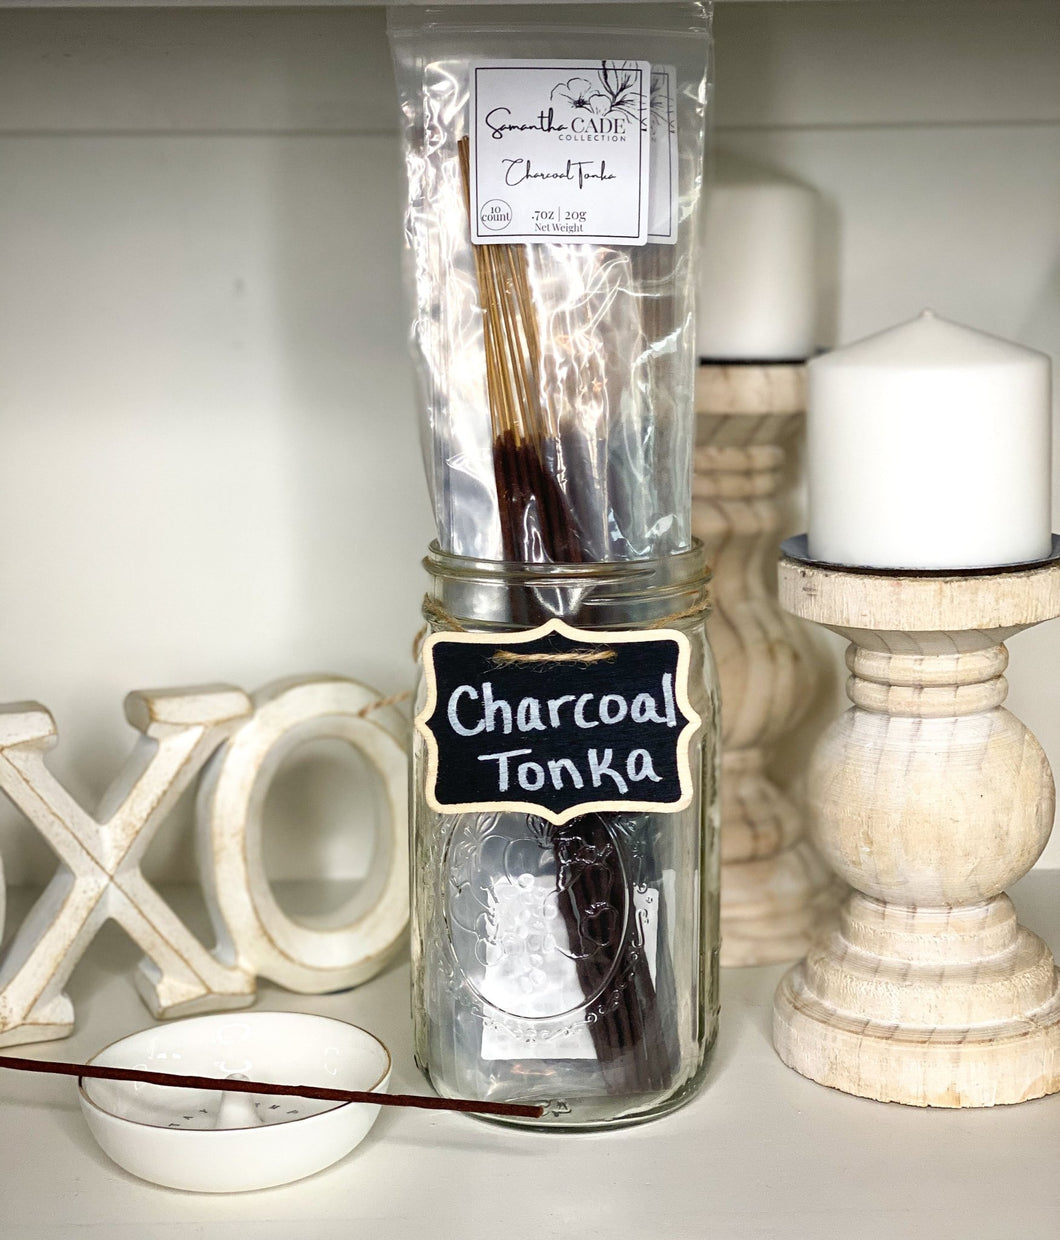 Charcoal Tonka Incense (10 count) - Samantha Cade Collection